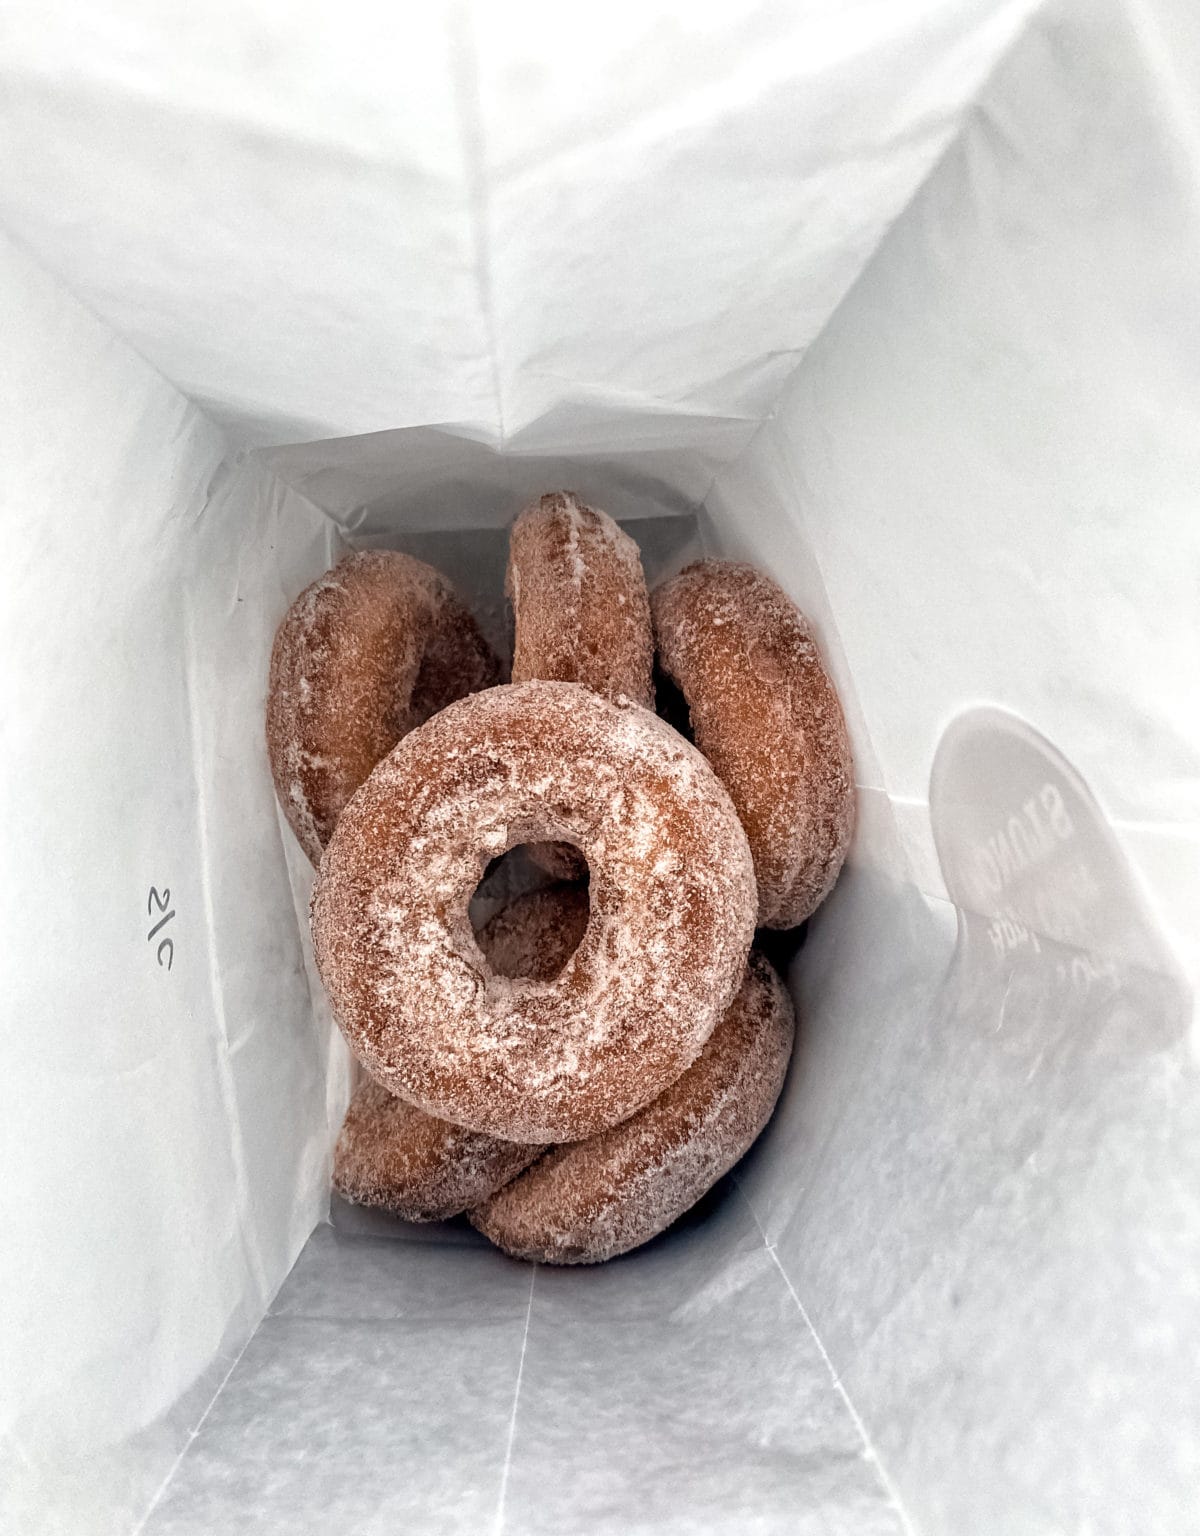 Sugary doughnuts in white bag